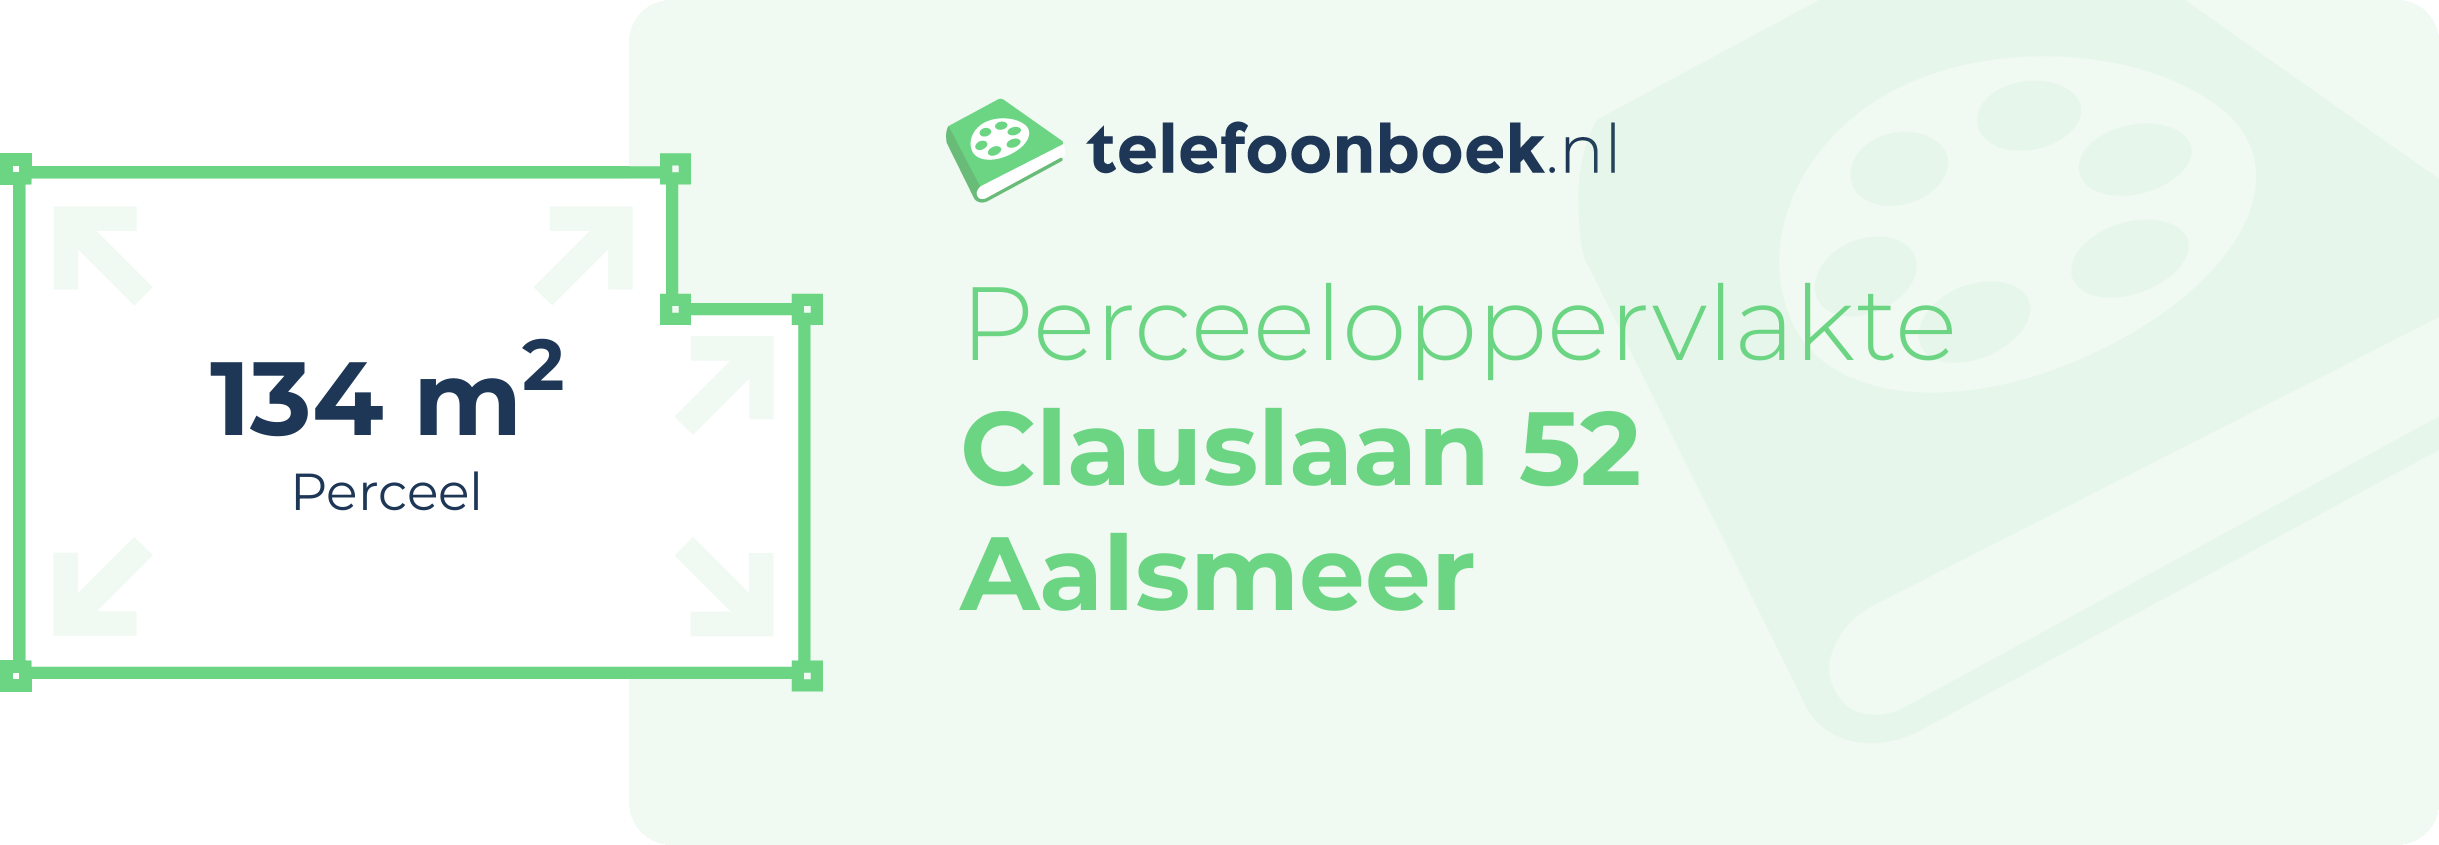 Perceeloppervlakte Clauslaan 52 Aalsmeer